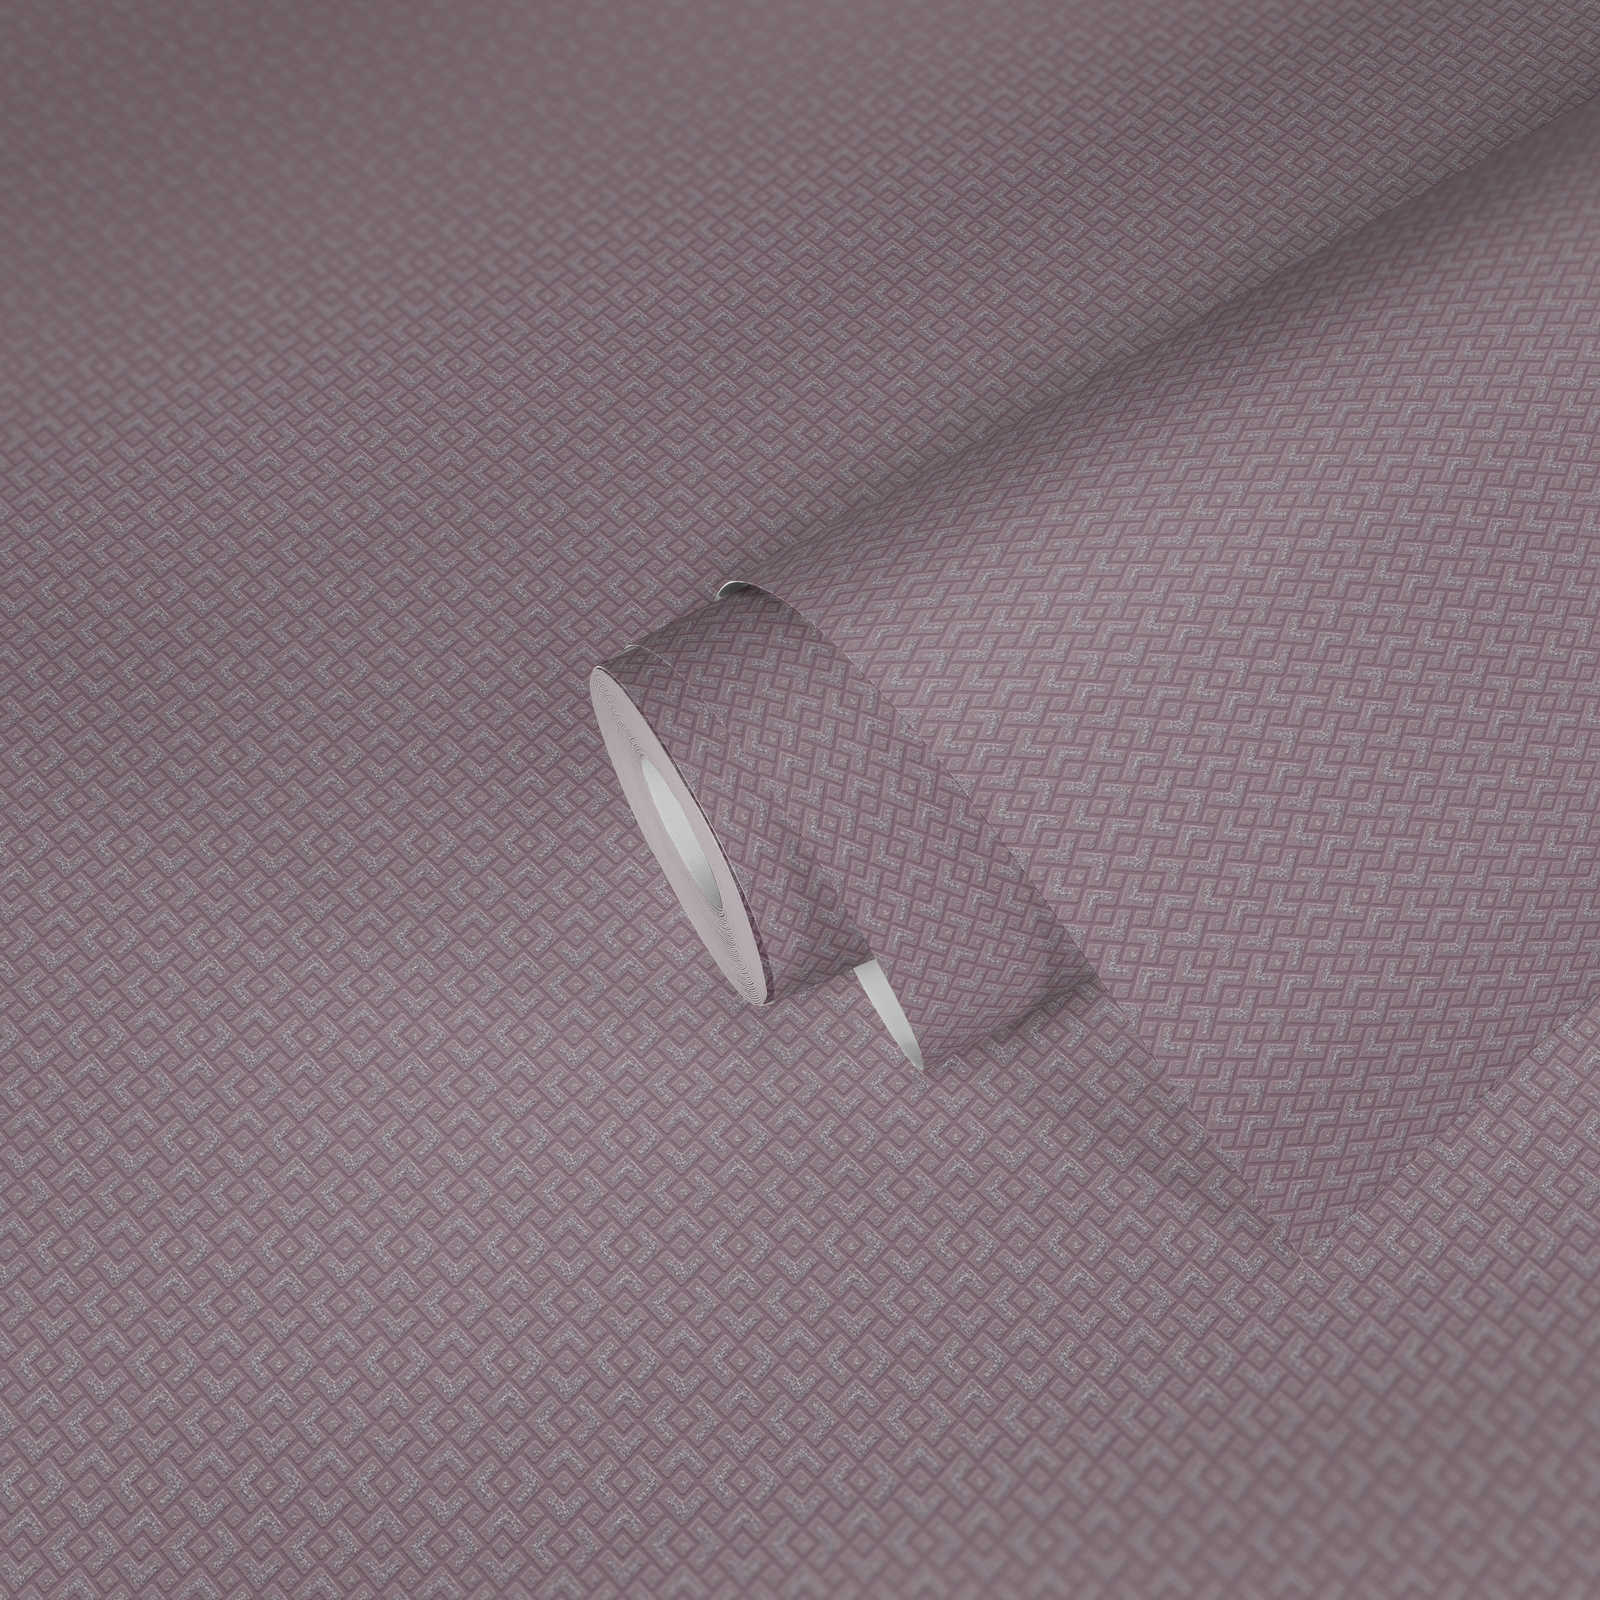             Einfarbige Tapete Altrosa mit Metallic-Effekt – Violett
        